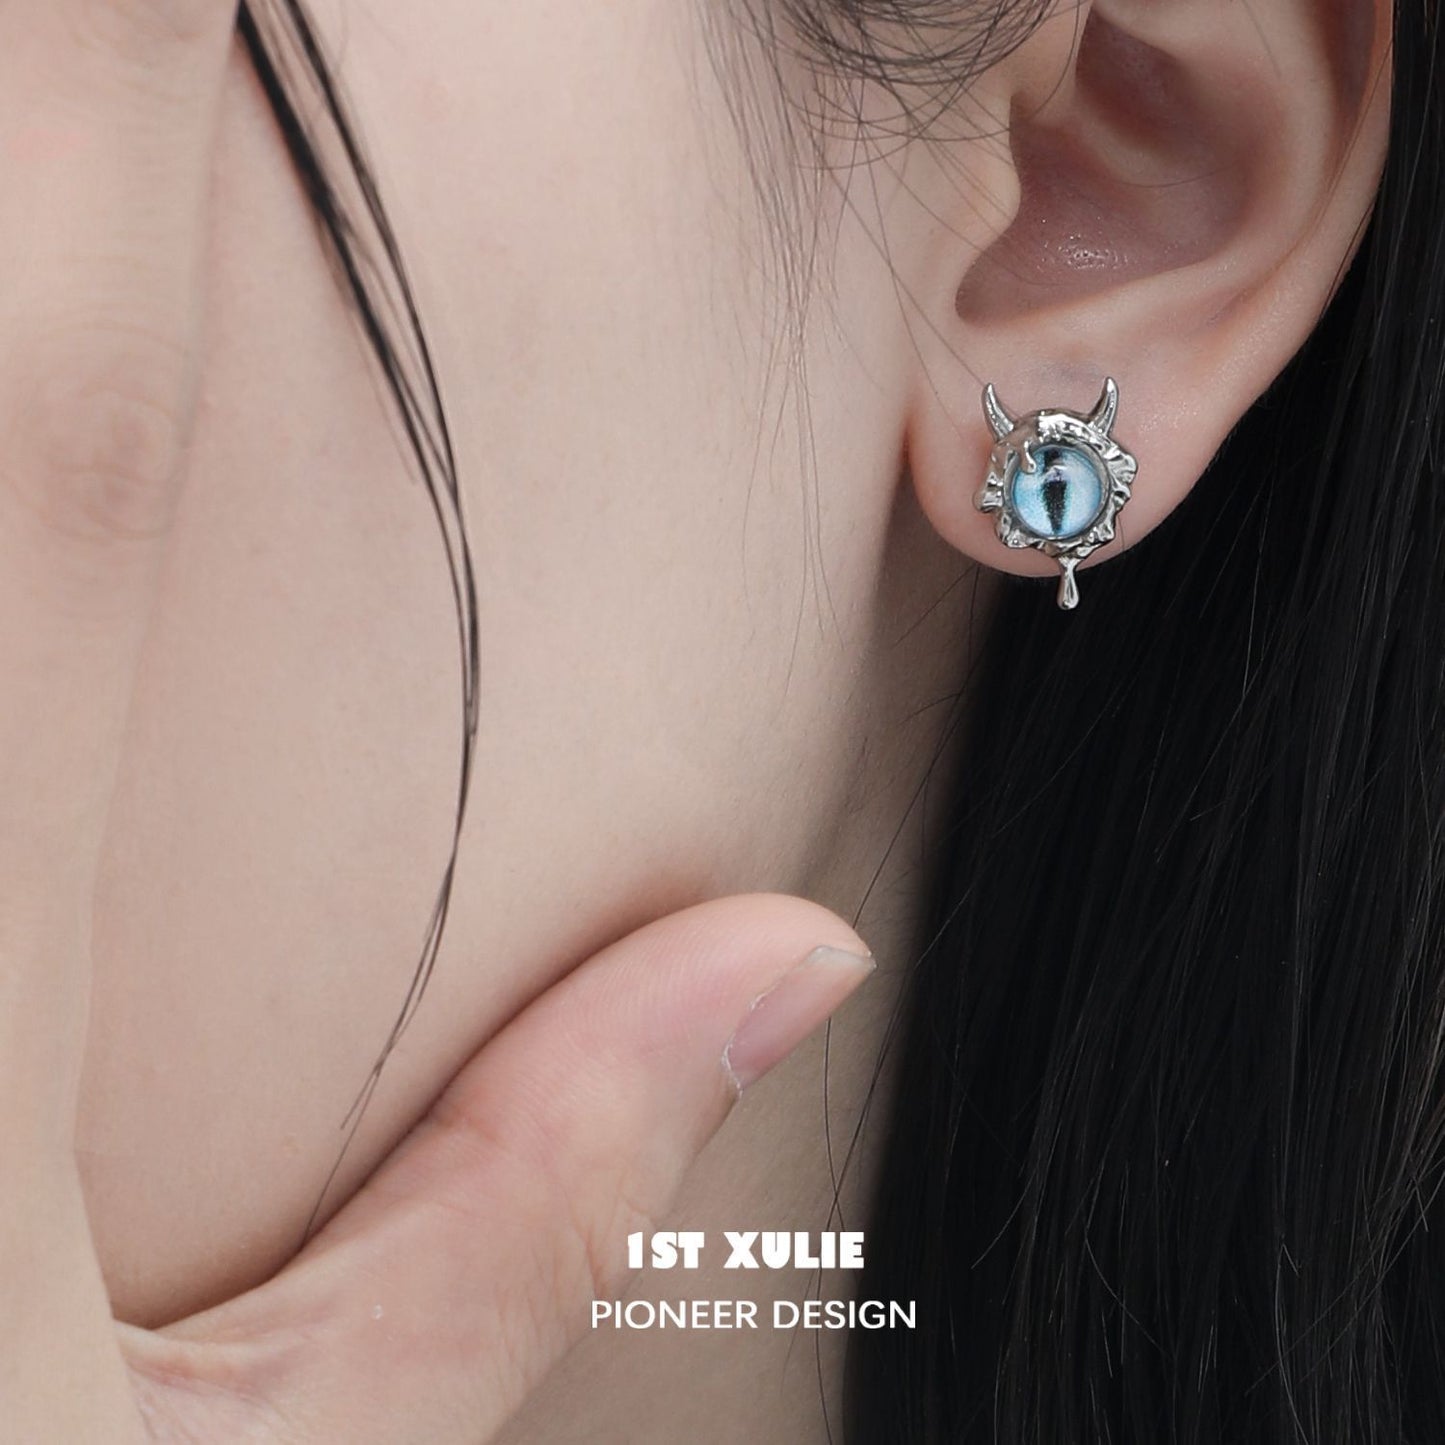 Ear Minority Design Sweet Cool Sier Rings